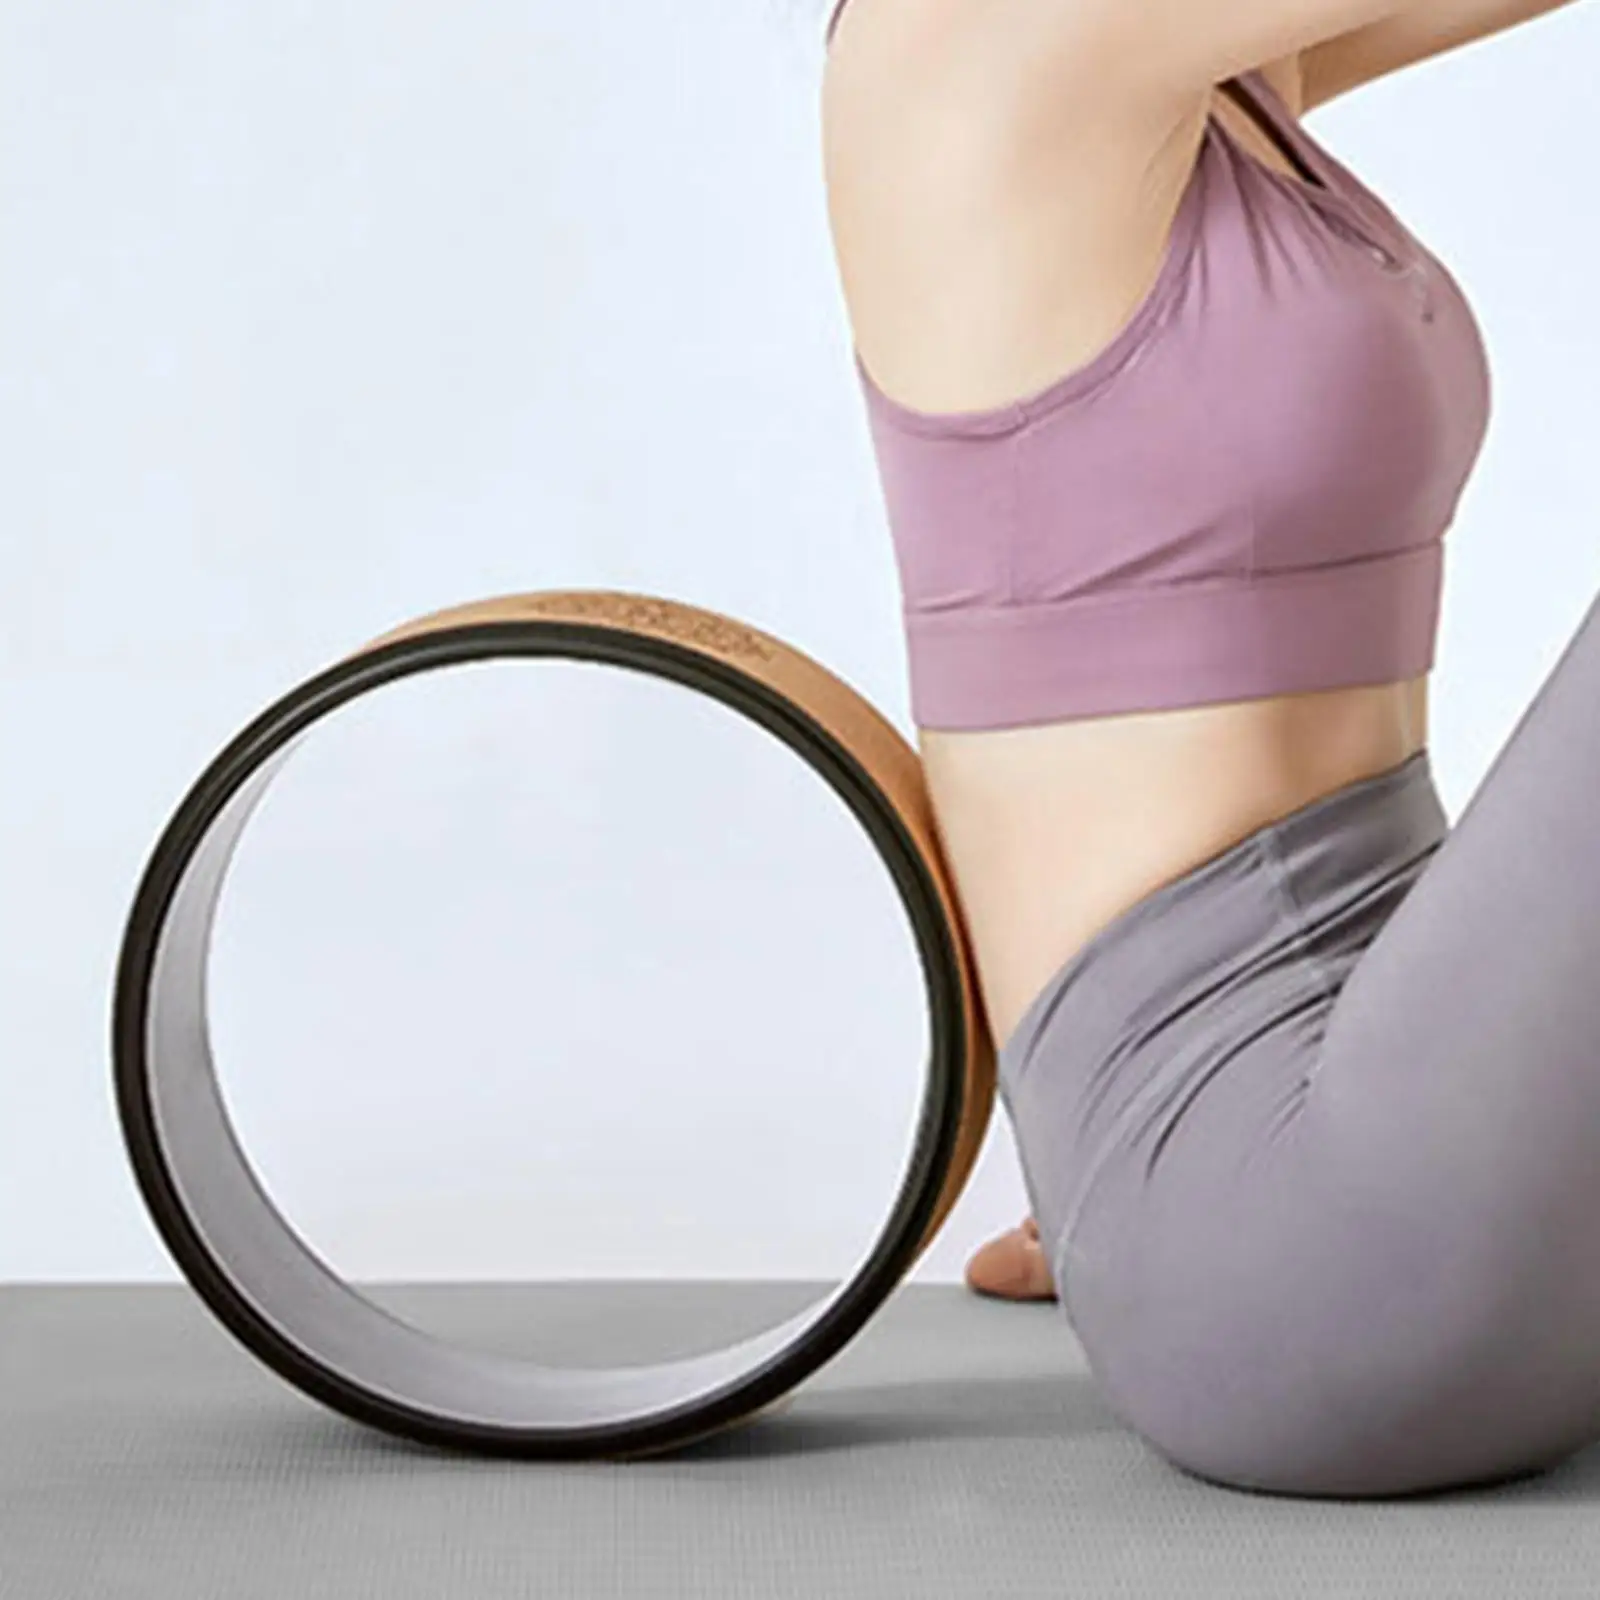 Circle Equipment Flexibility Stretching Durable Balance Wheel for Gym Sports